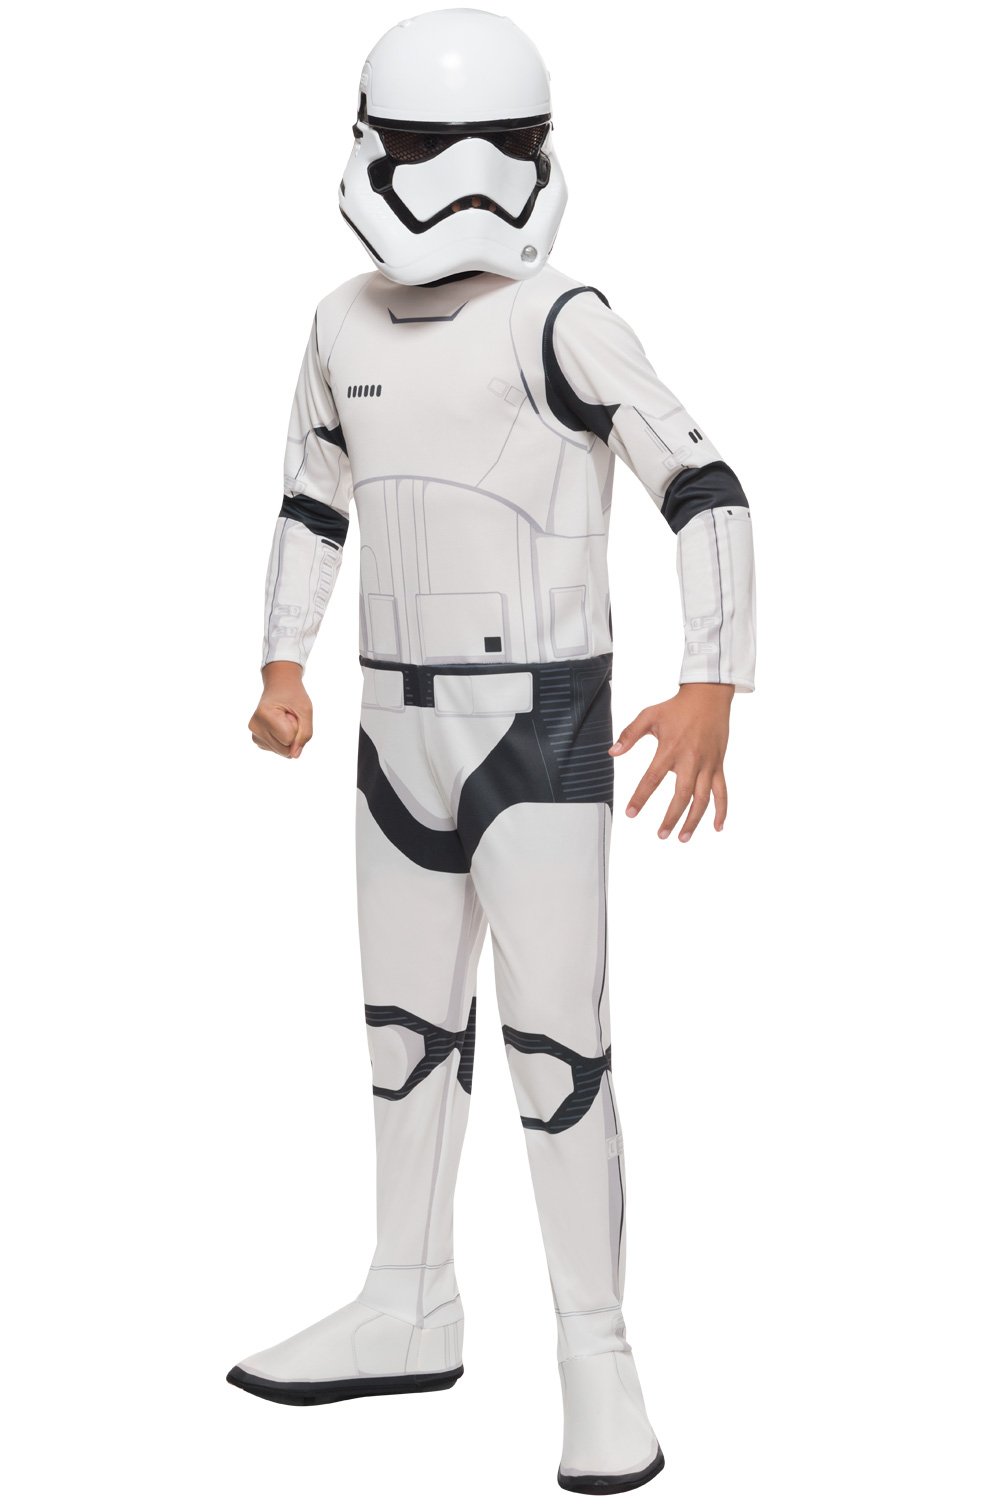 Star Wars The Force Awakens Child Costume Accessory Stormtrooper 2-Piece Helmet 